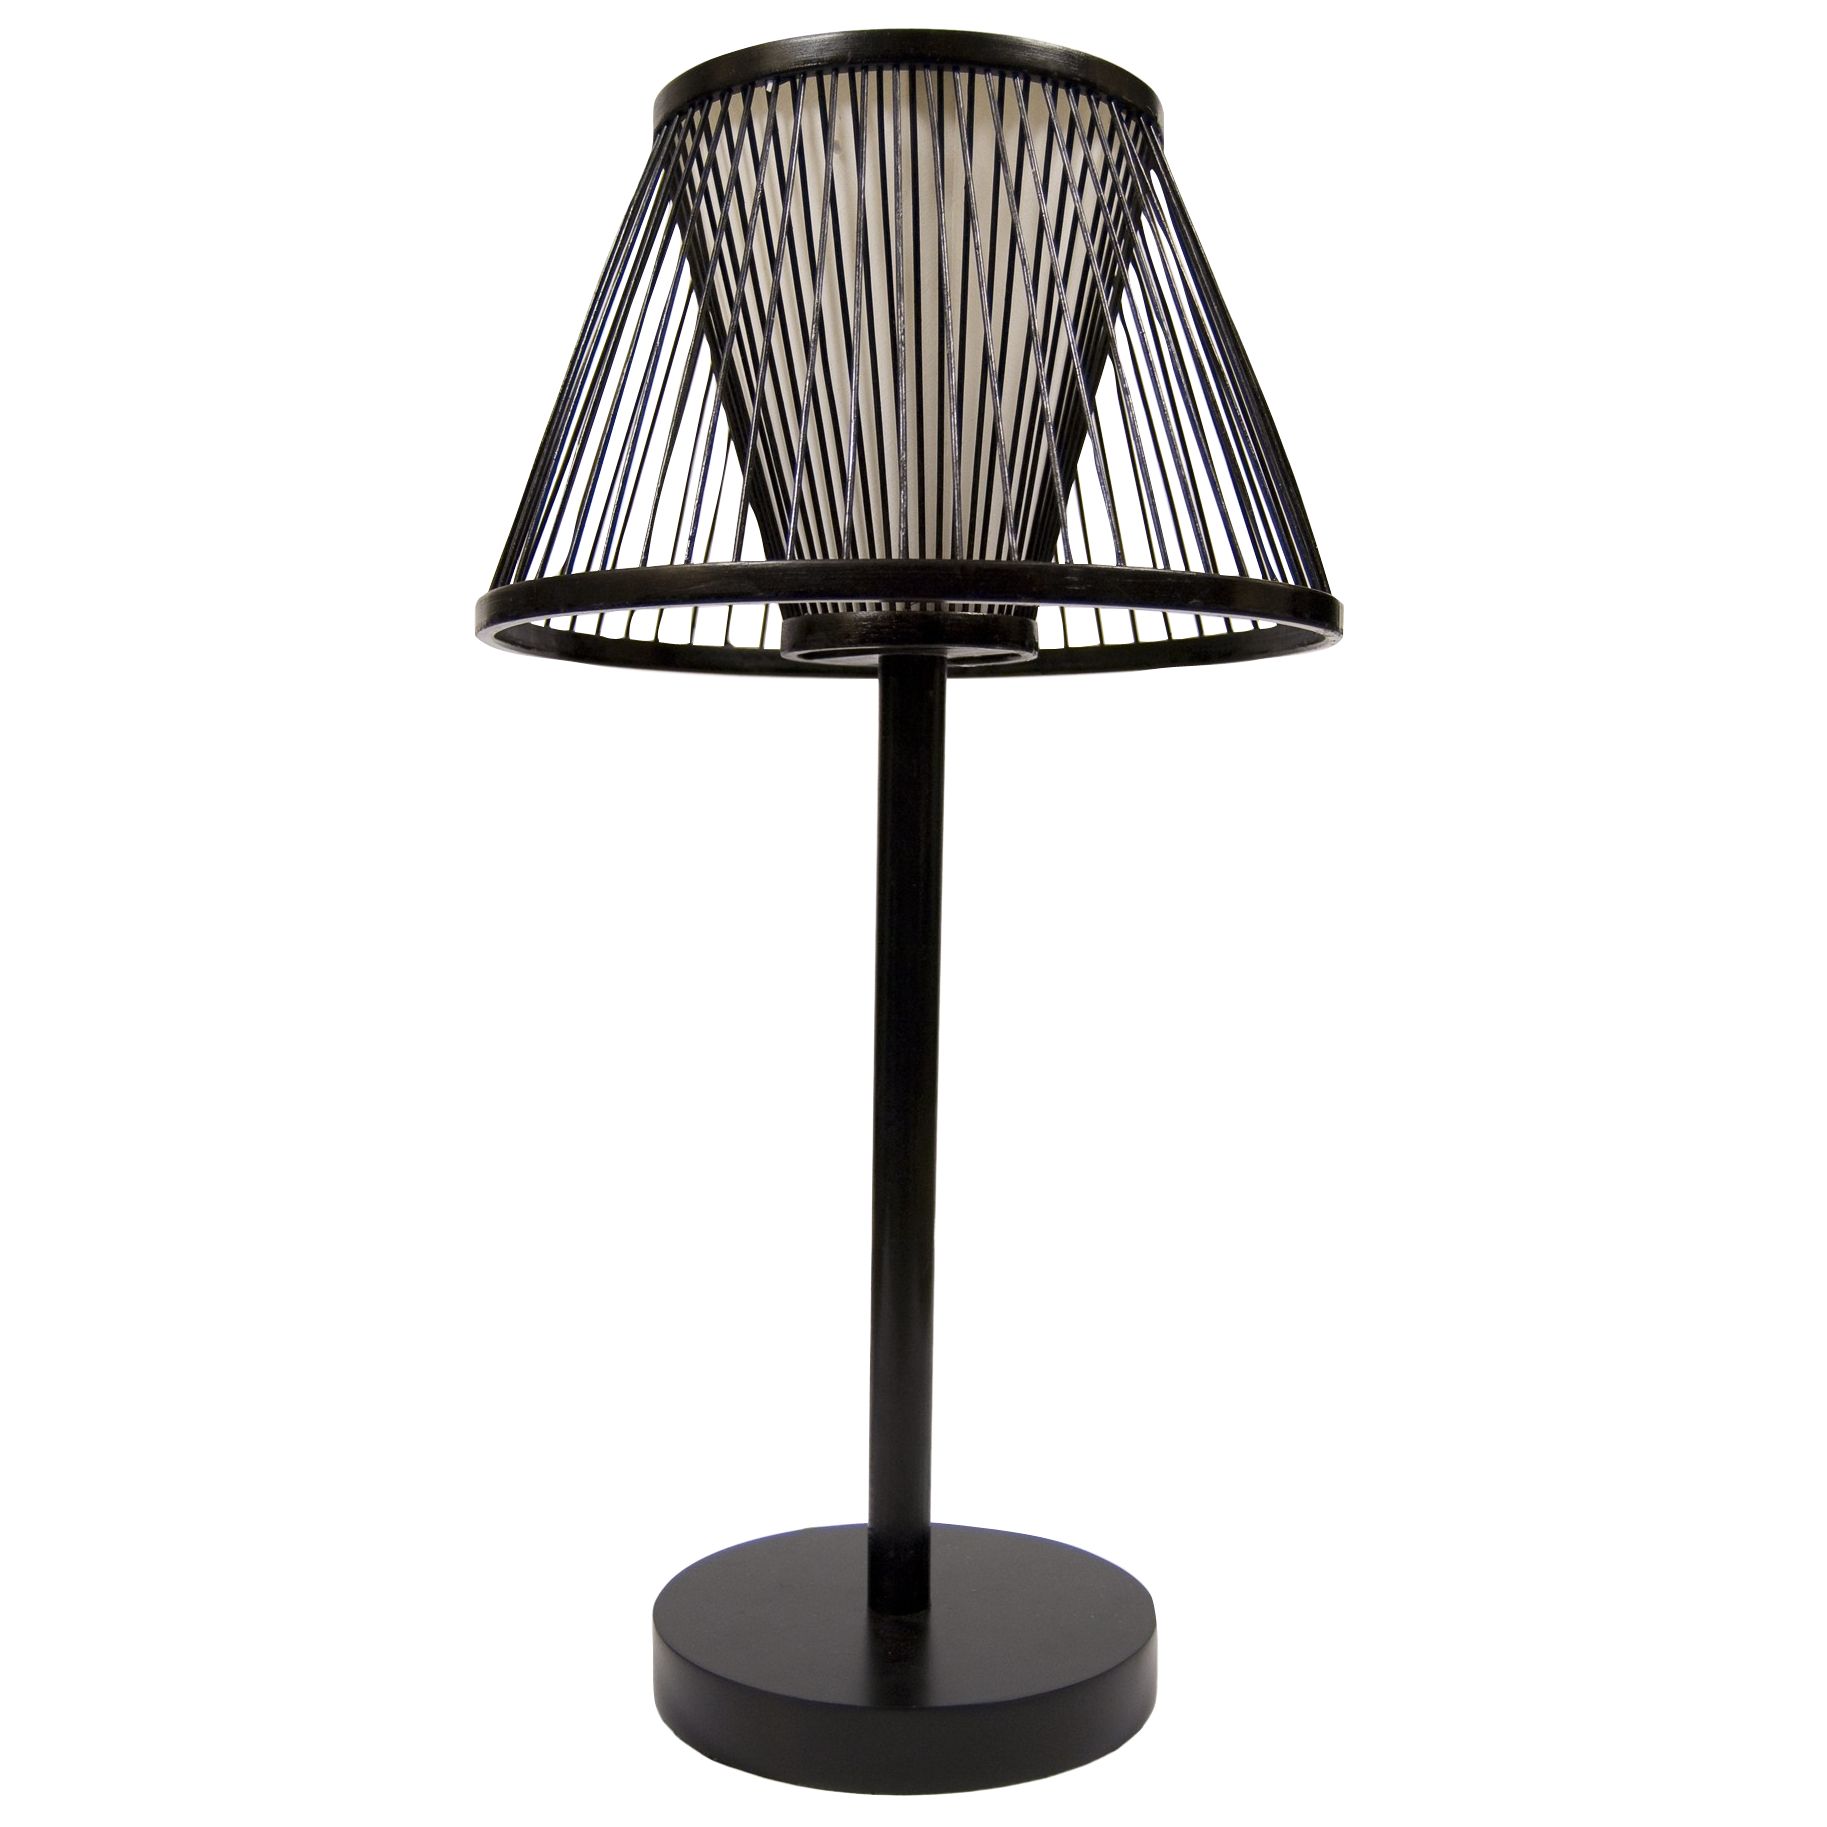 John Lewis Casey Table Lamp